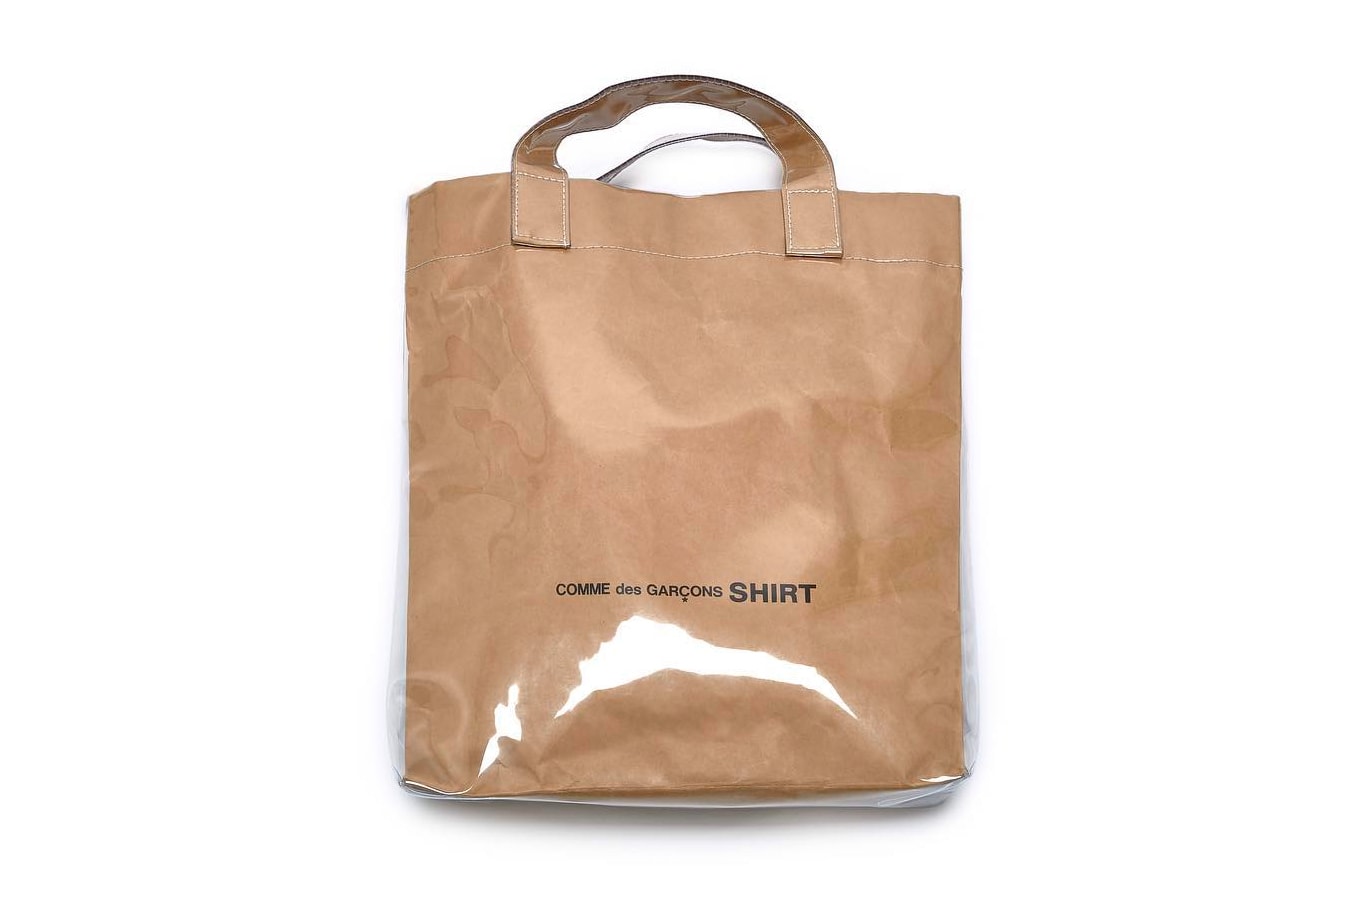 COMME des GARÇONS SHIRT PVC Plastic Paper Tote Bag New Dover Street Market Strap Shoulder